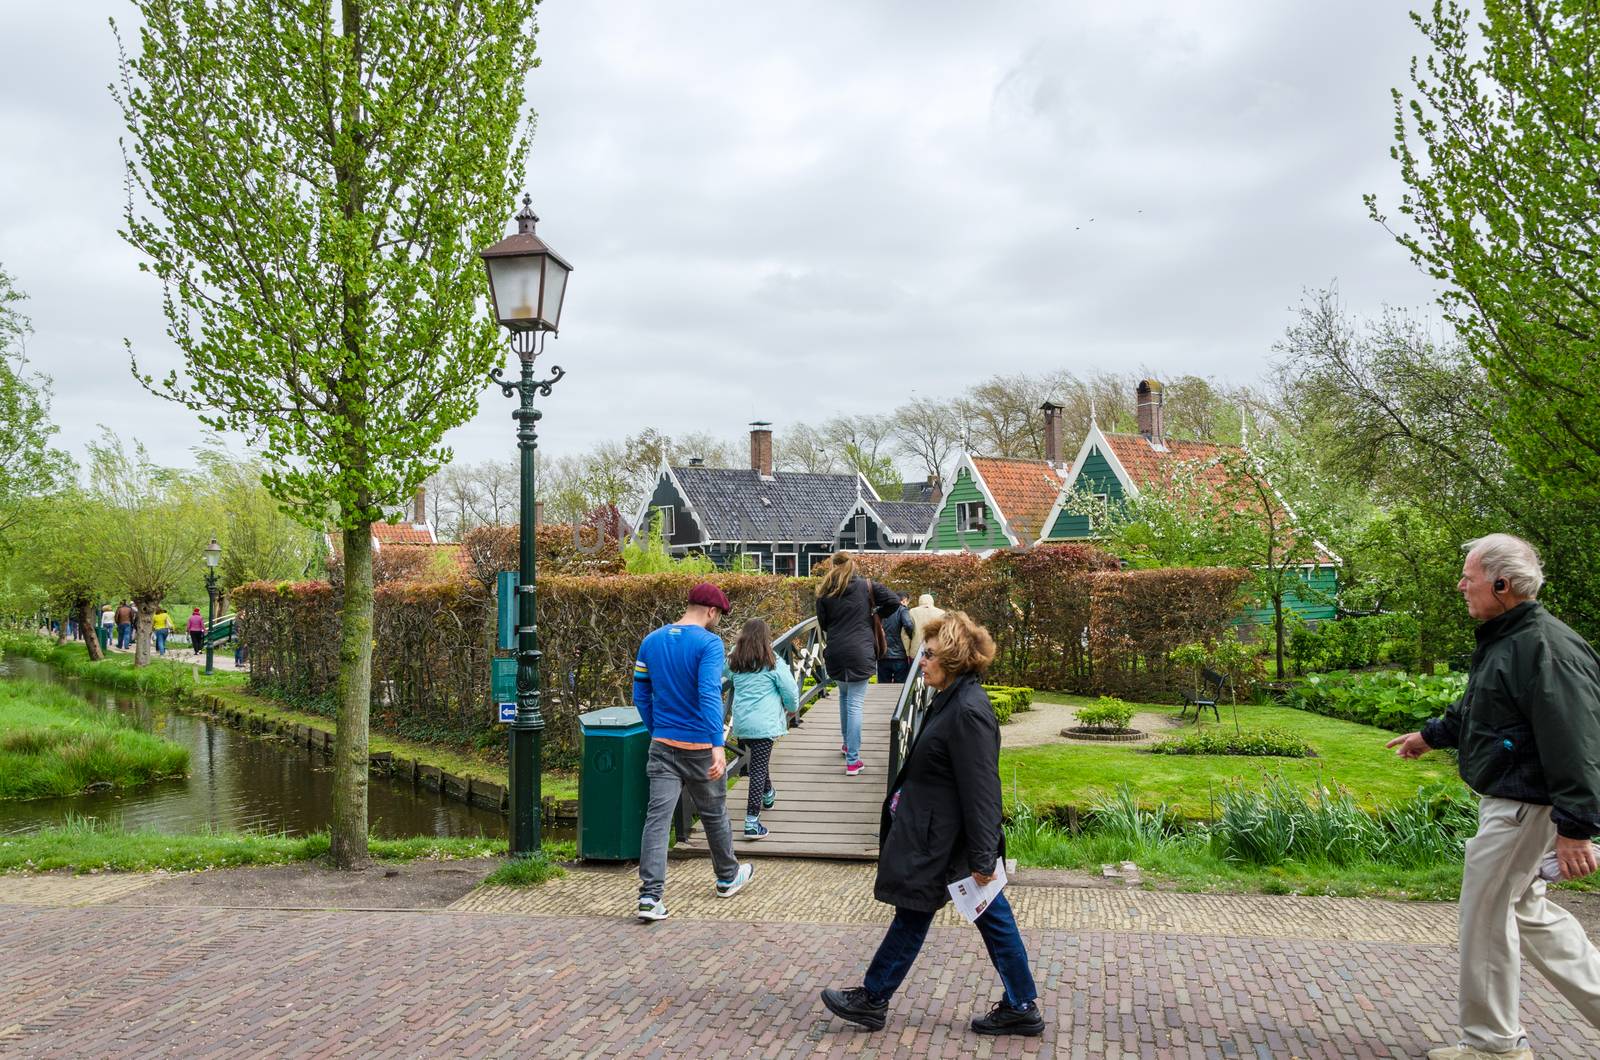 Zaanse Schans, Netherlands - May 5, 2015: Tourists visit Windmills and rural houses in Zaanse Schans, Netherlands. This village is a popular touristic destination in Netherlands